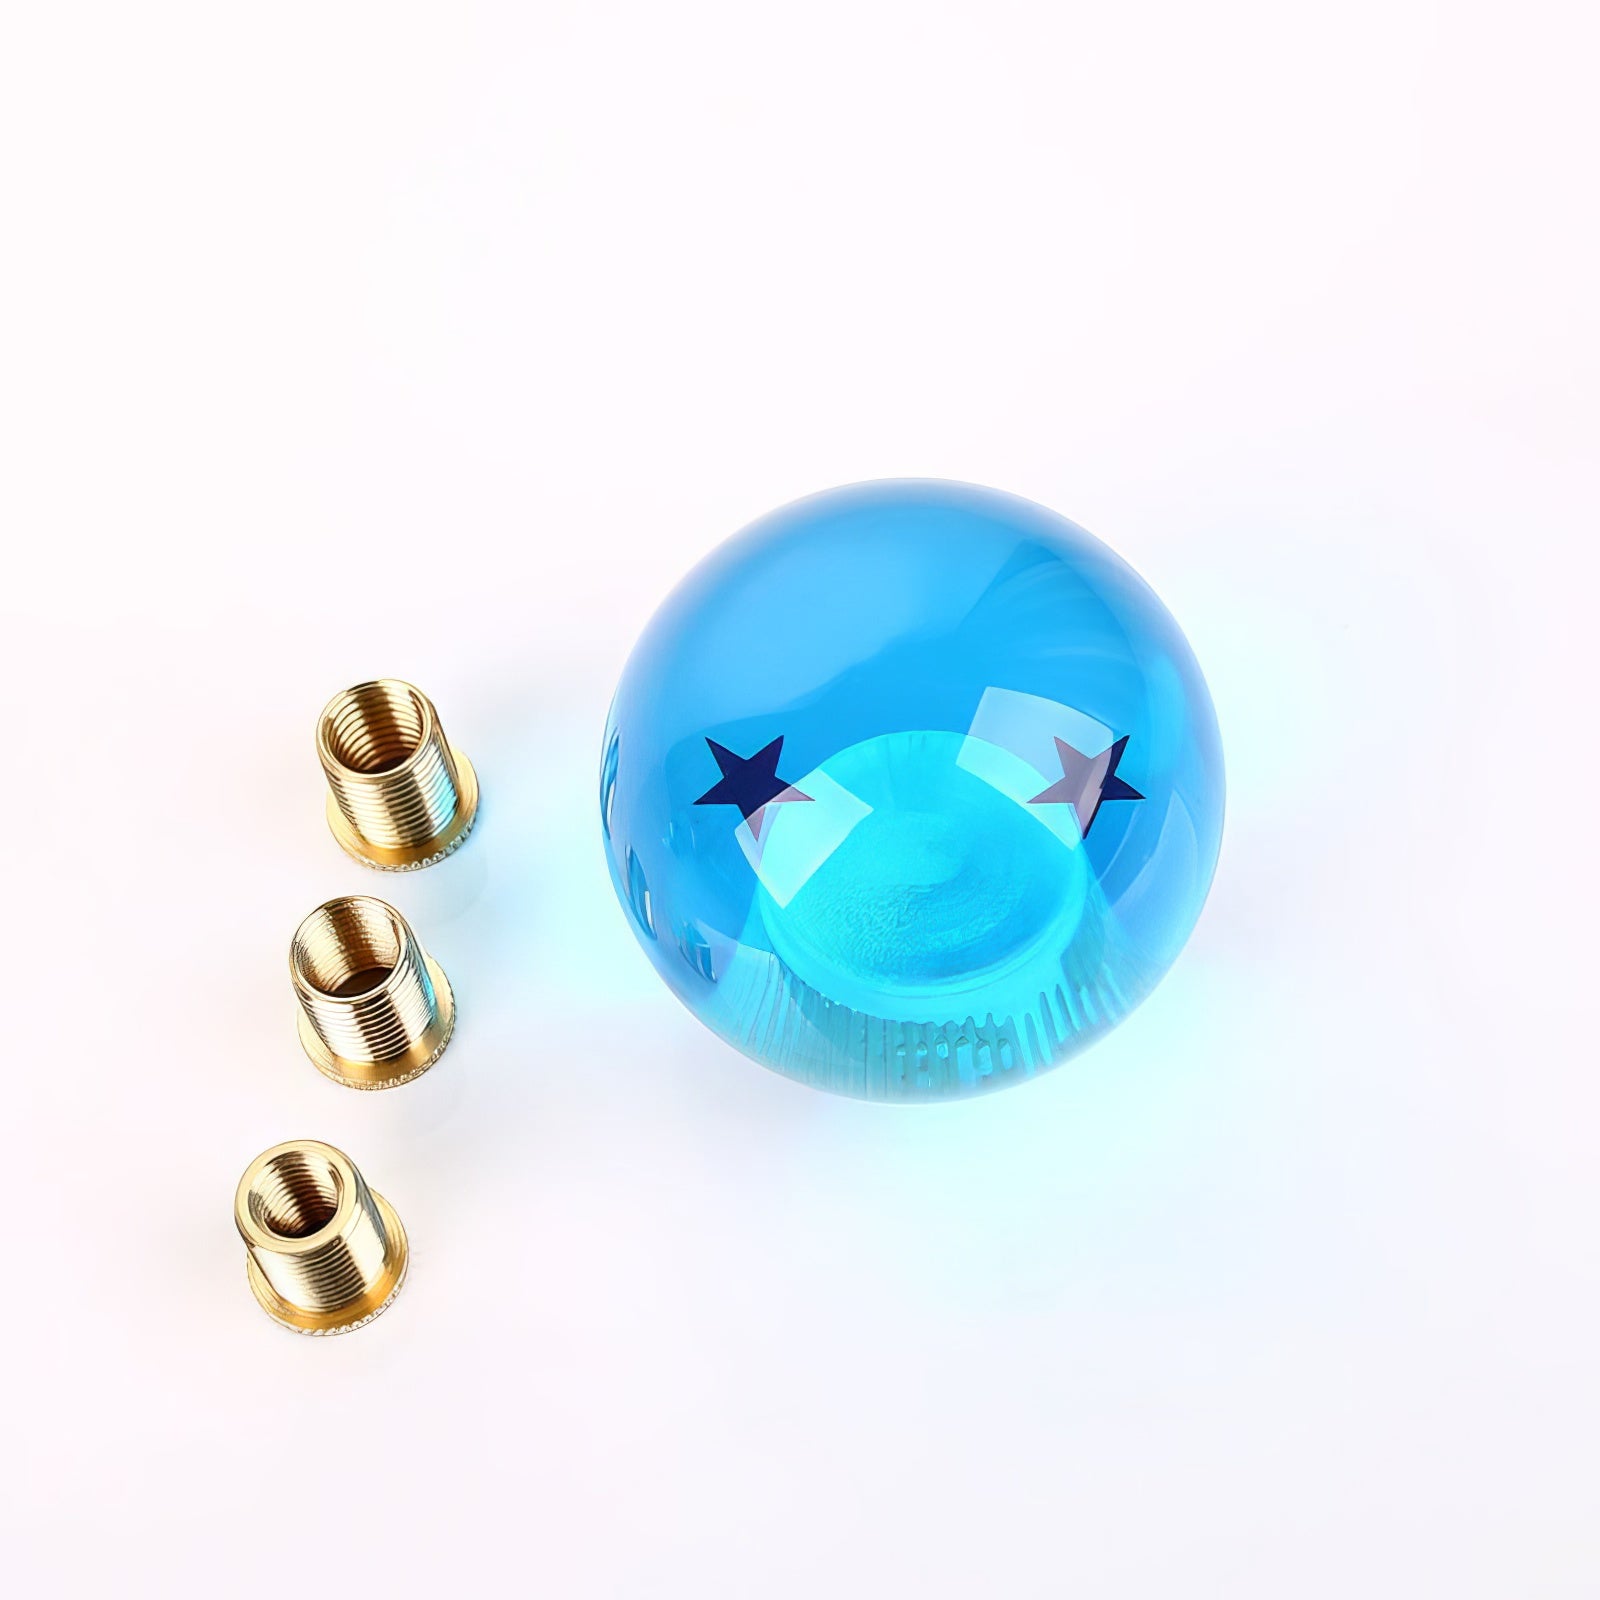 Rare blue dragon ball z gear shift knob 2 stars